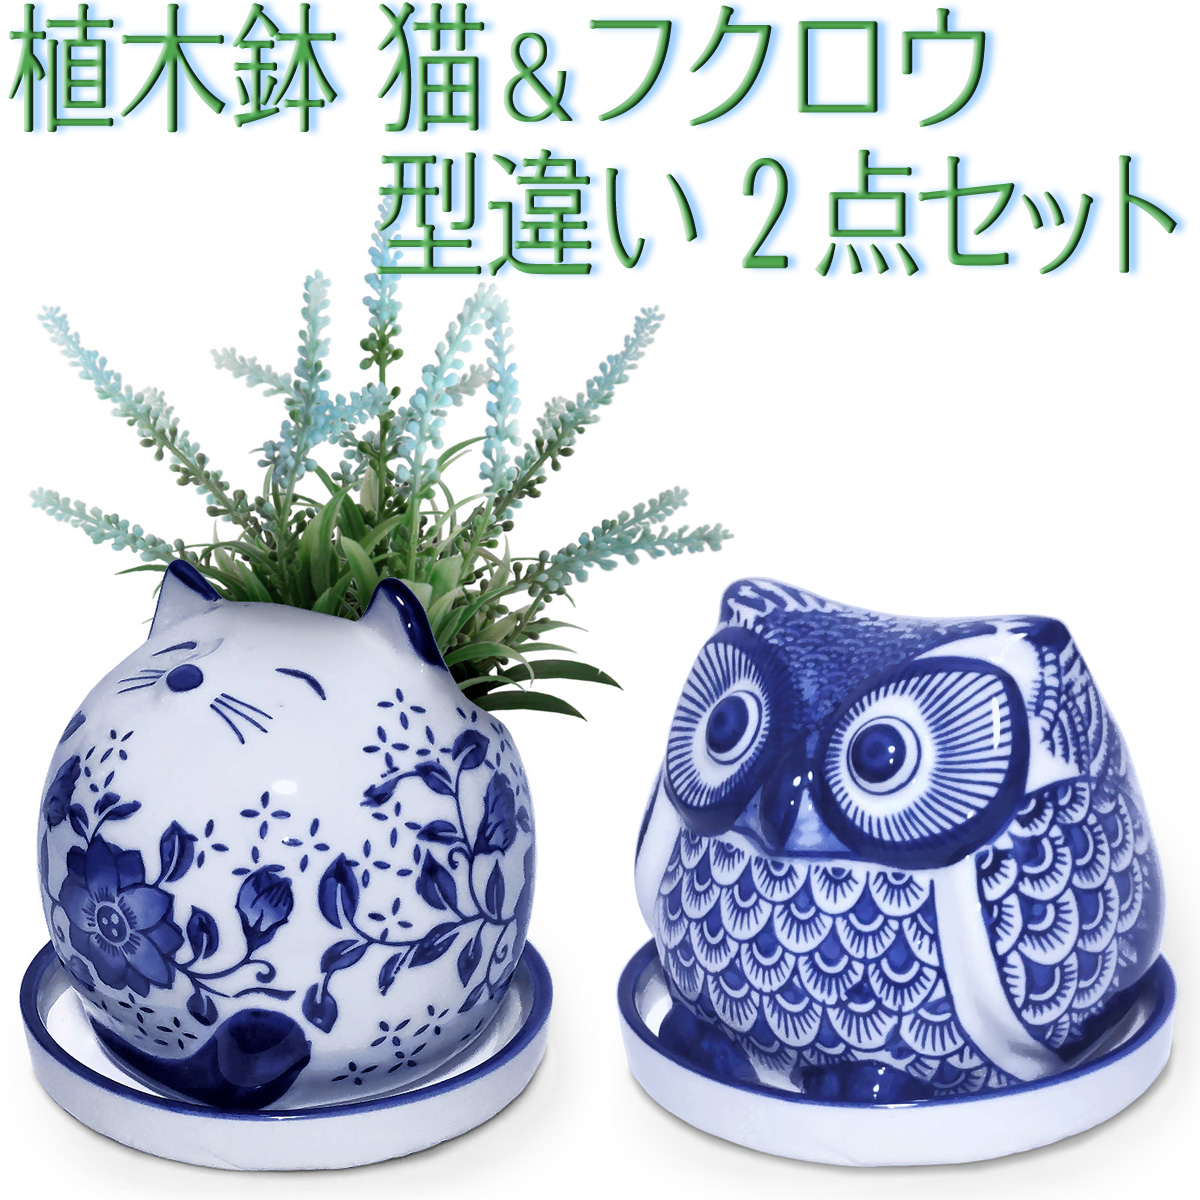  plant pot plate attaching cat & owl image image 